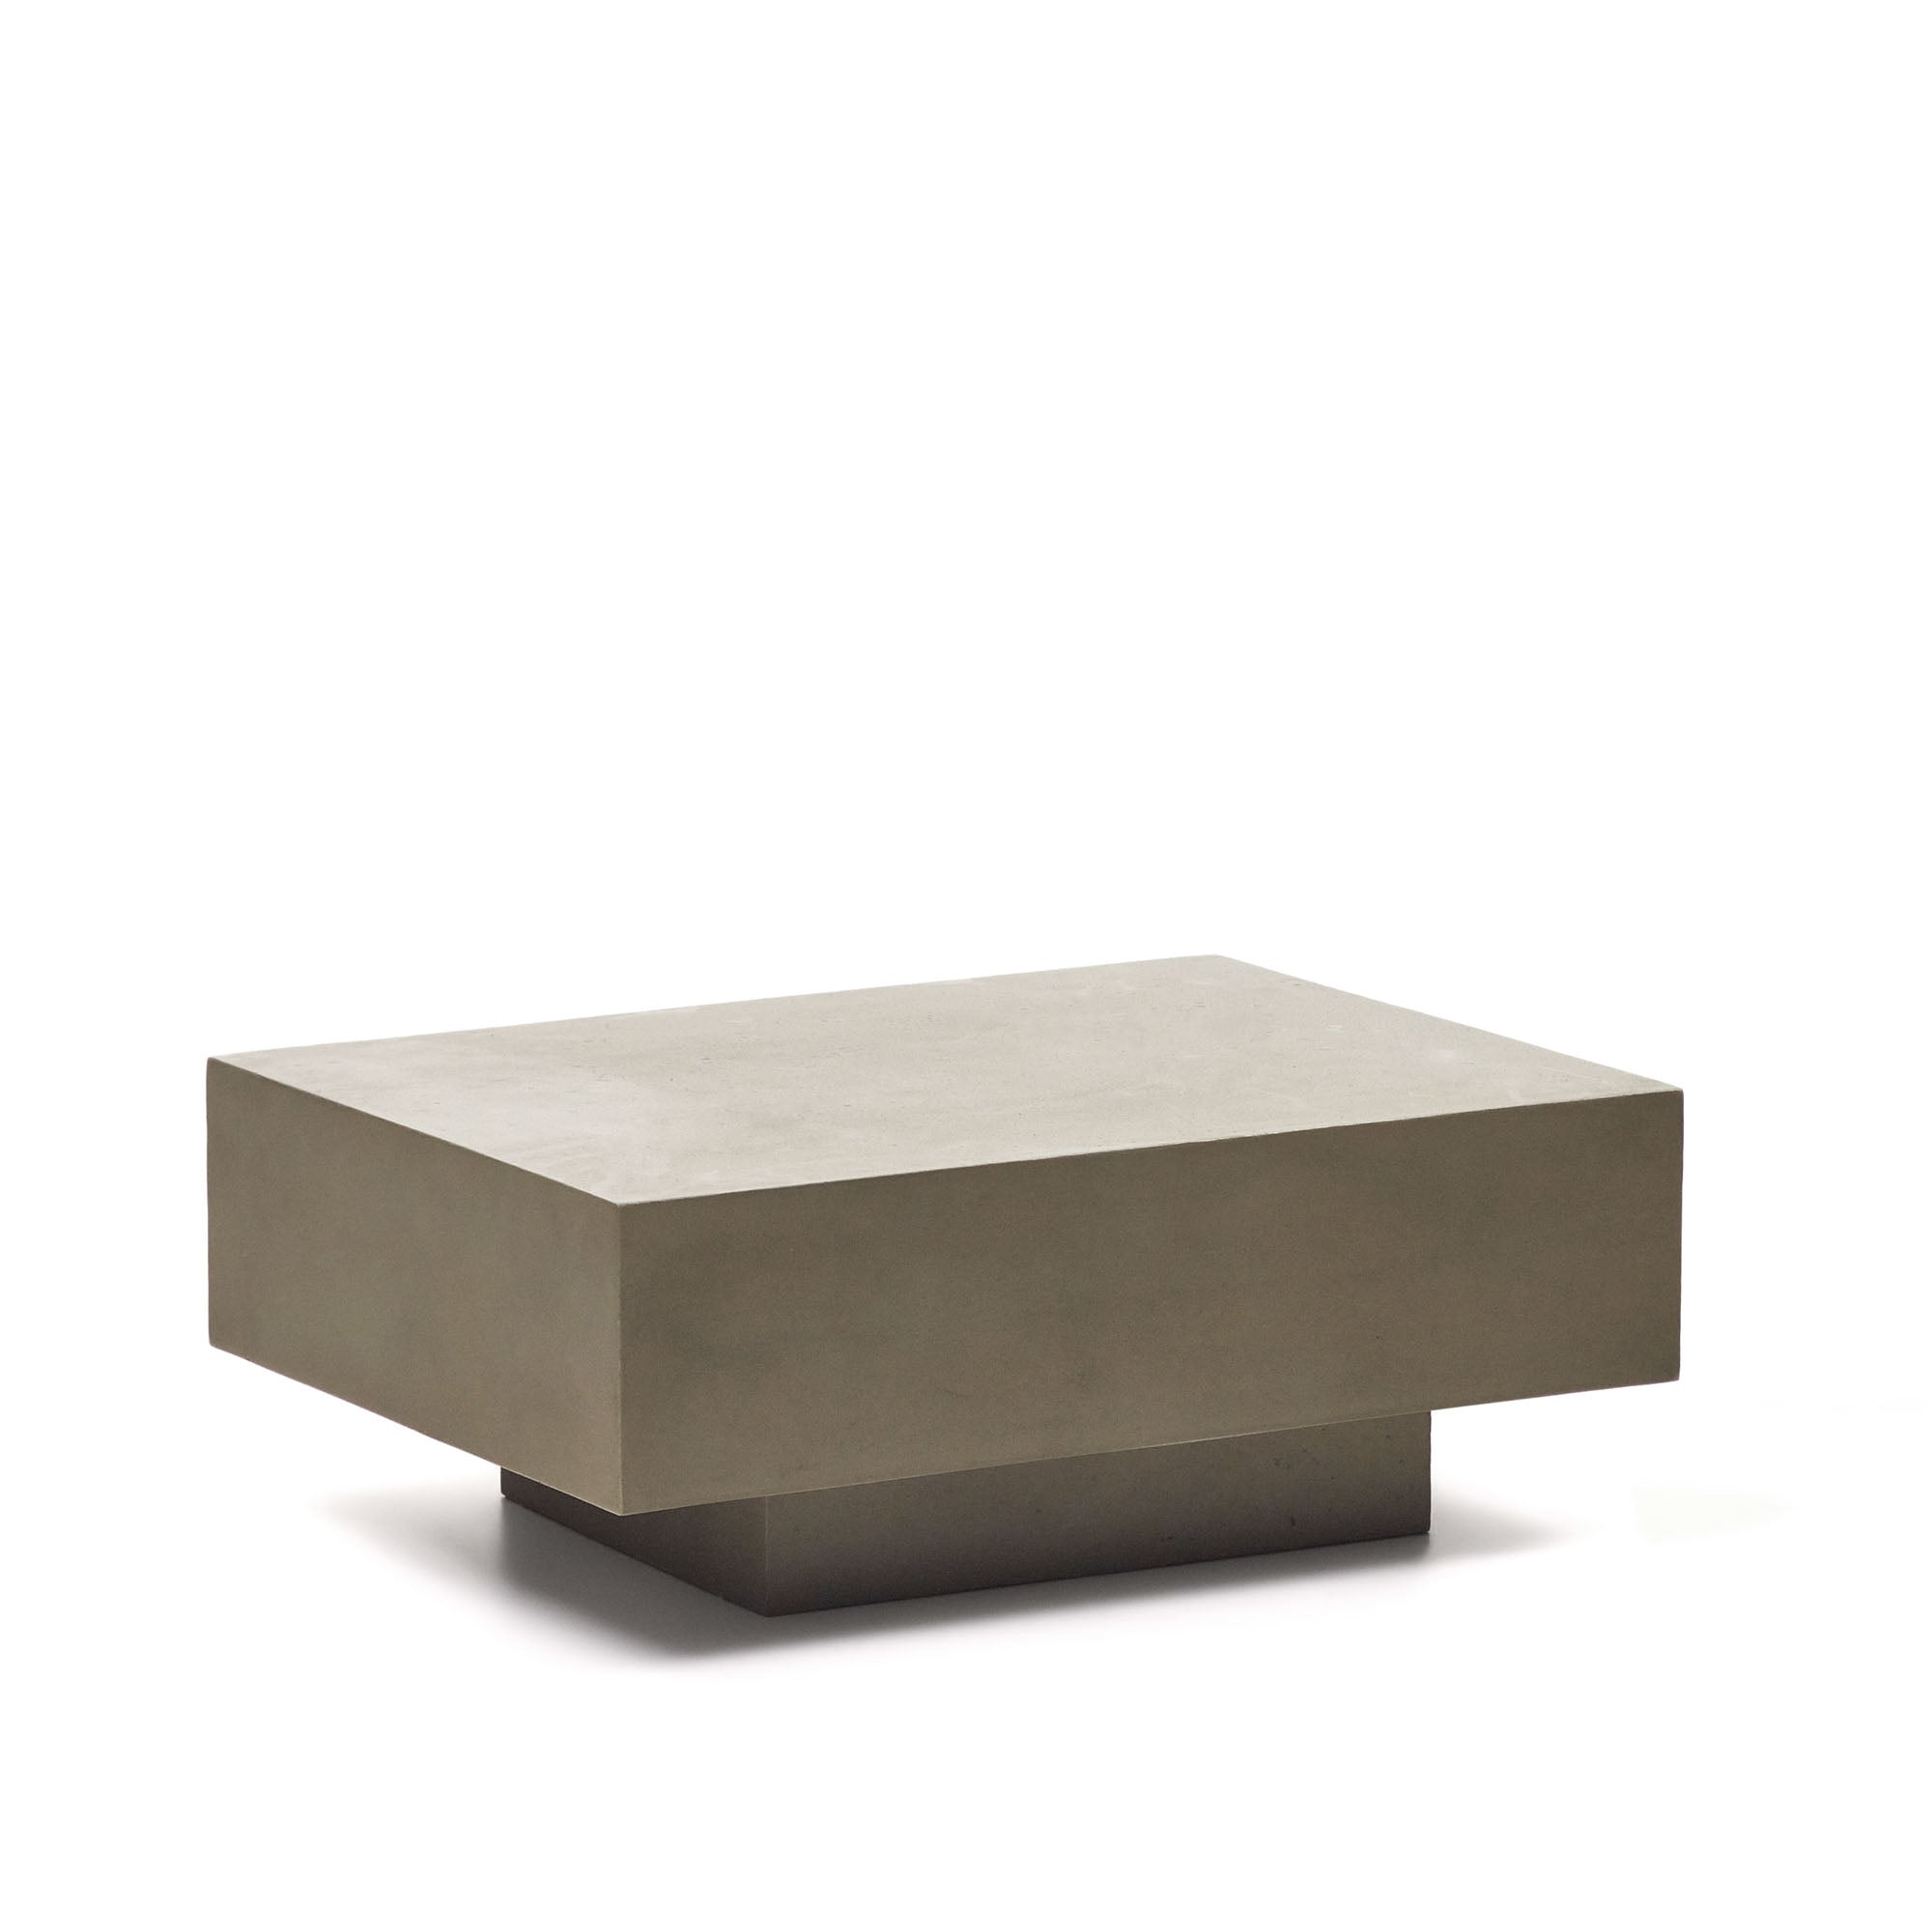 Rustella cement coffee table, 80 x 60 cm